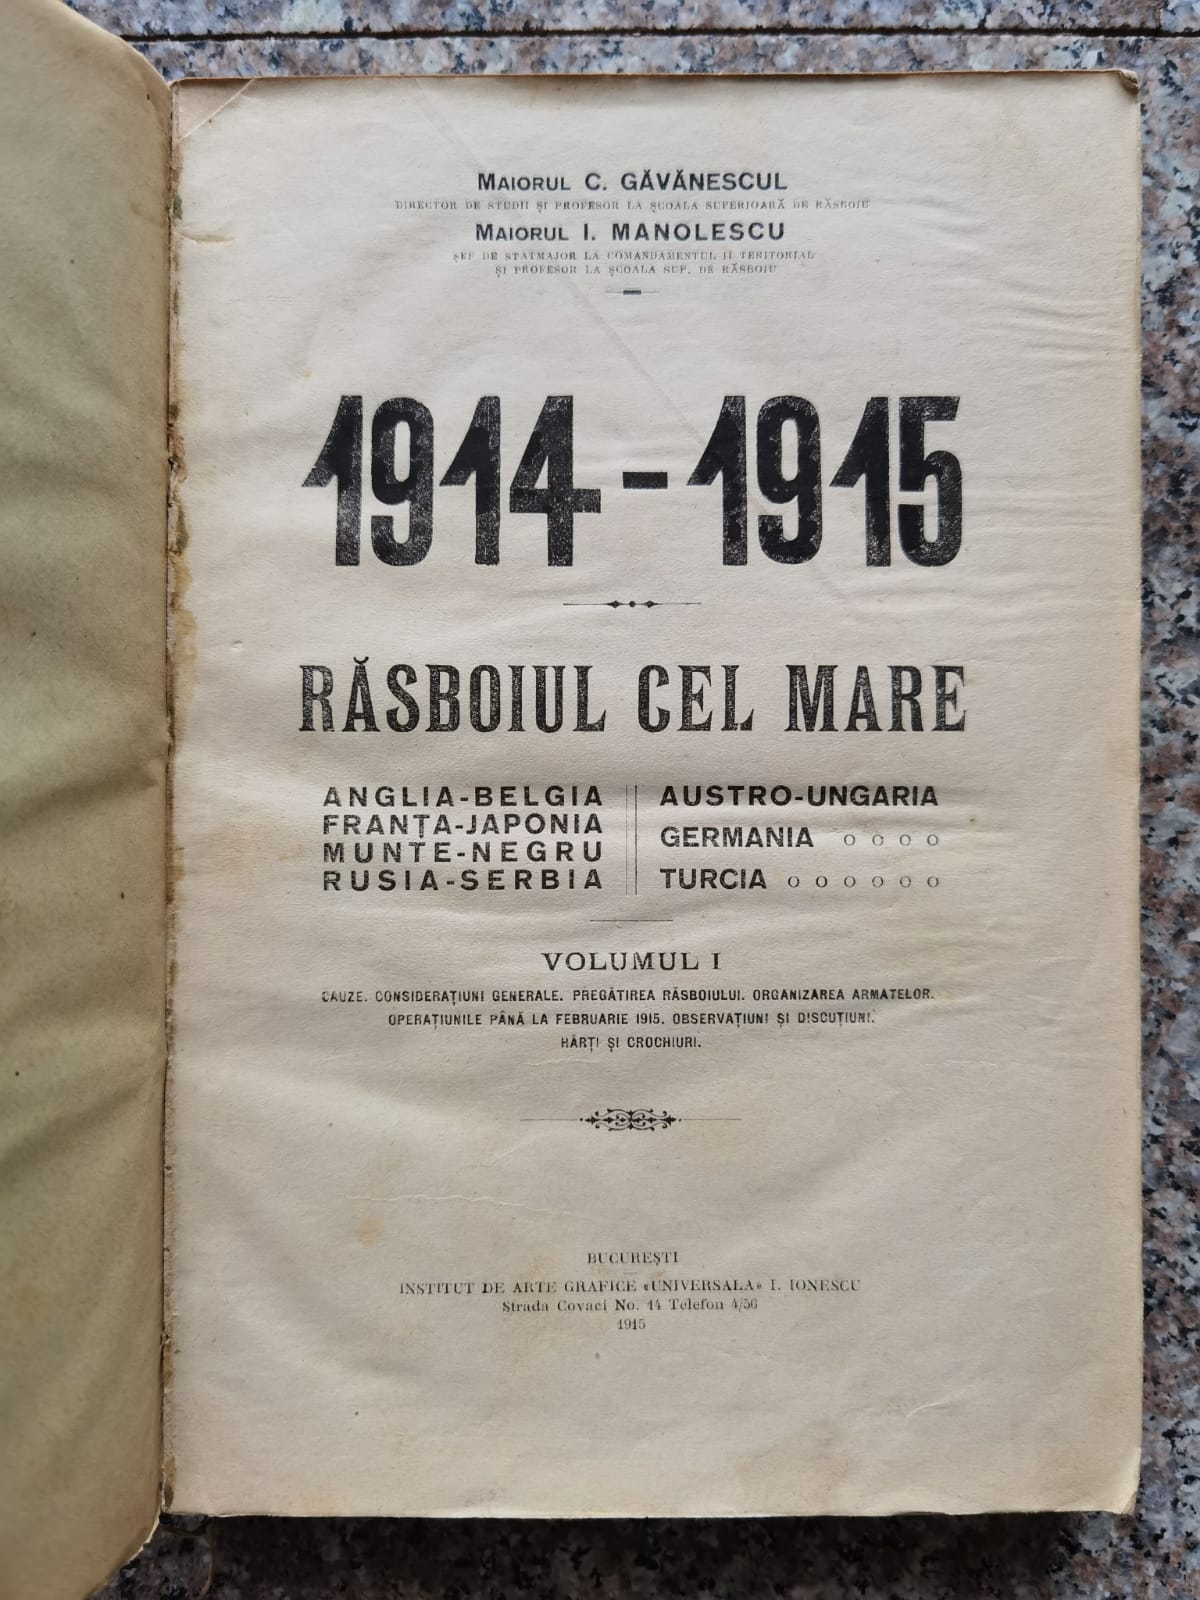 1914-1915 rasboiul cel mare vol. 1                                                                   c. gavanescul, i. manolescu                                                                         